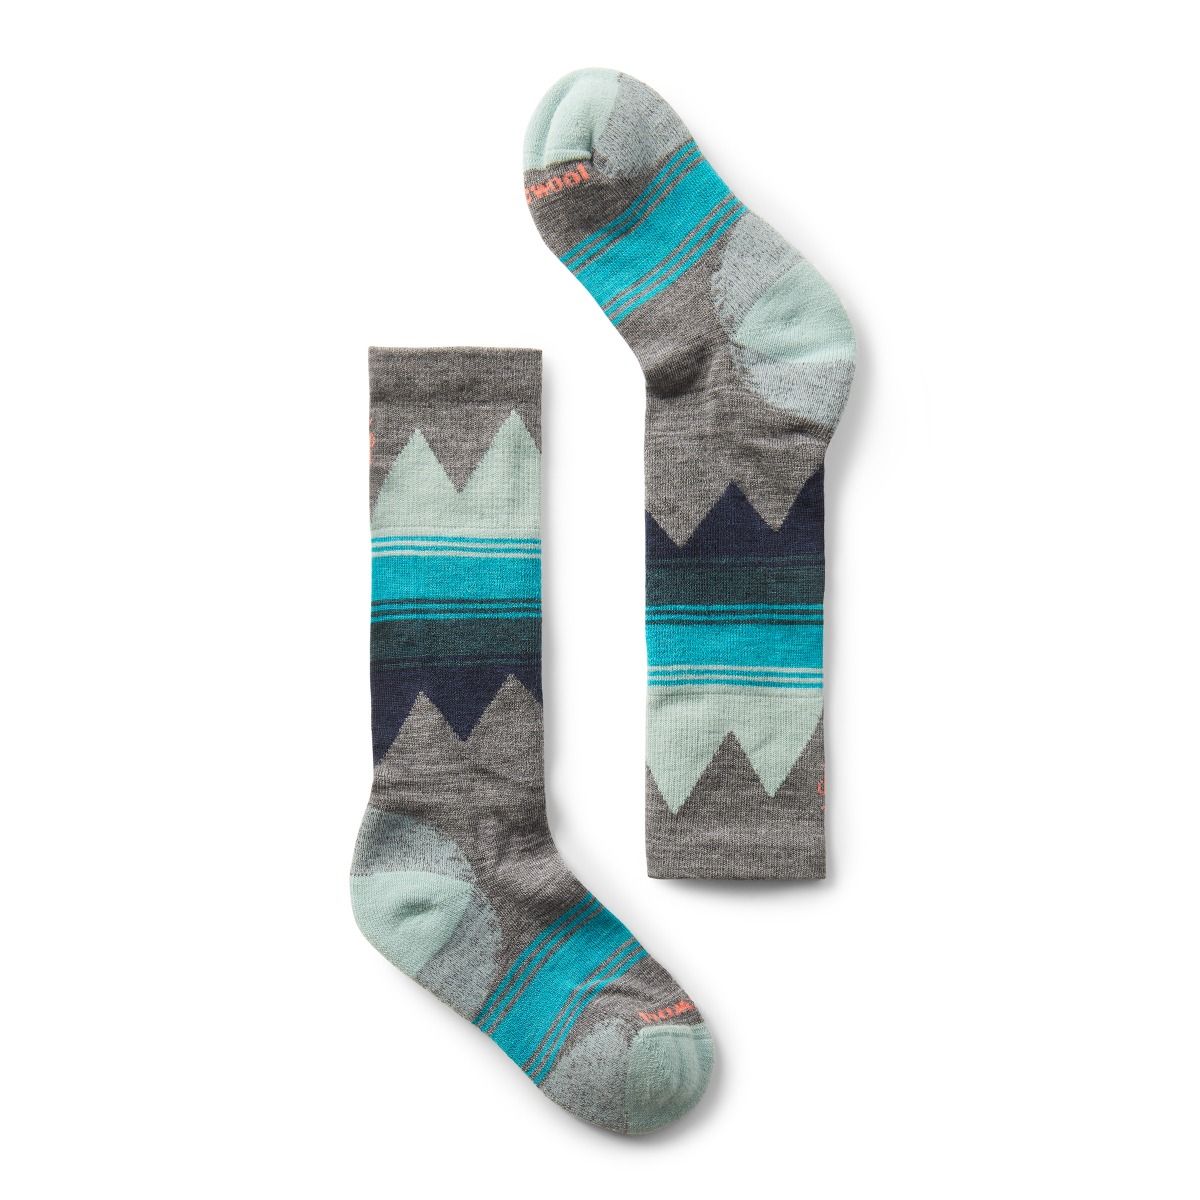  Anlisim Kids Merino Wool Ski Socks for Girls Boys Teen